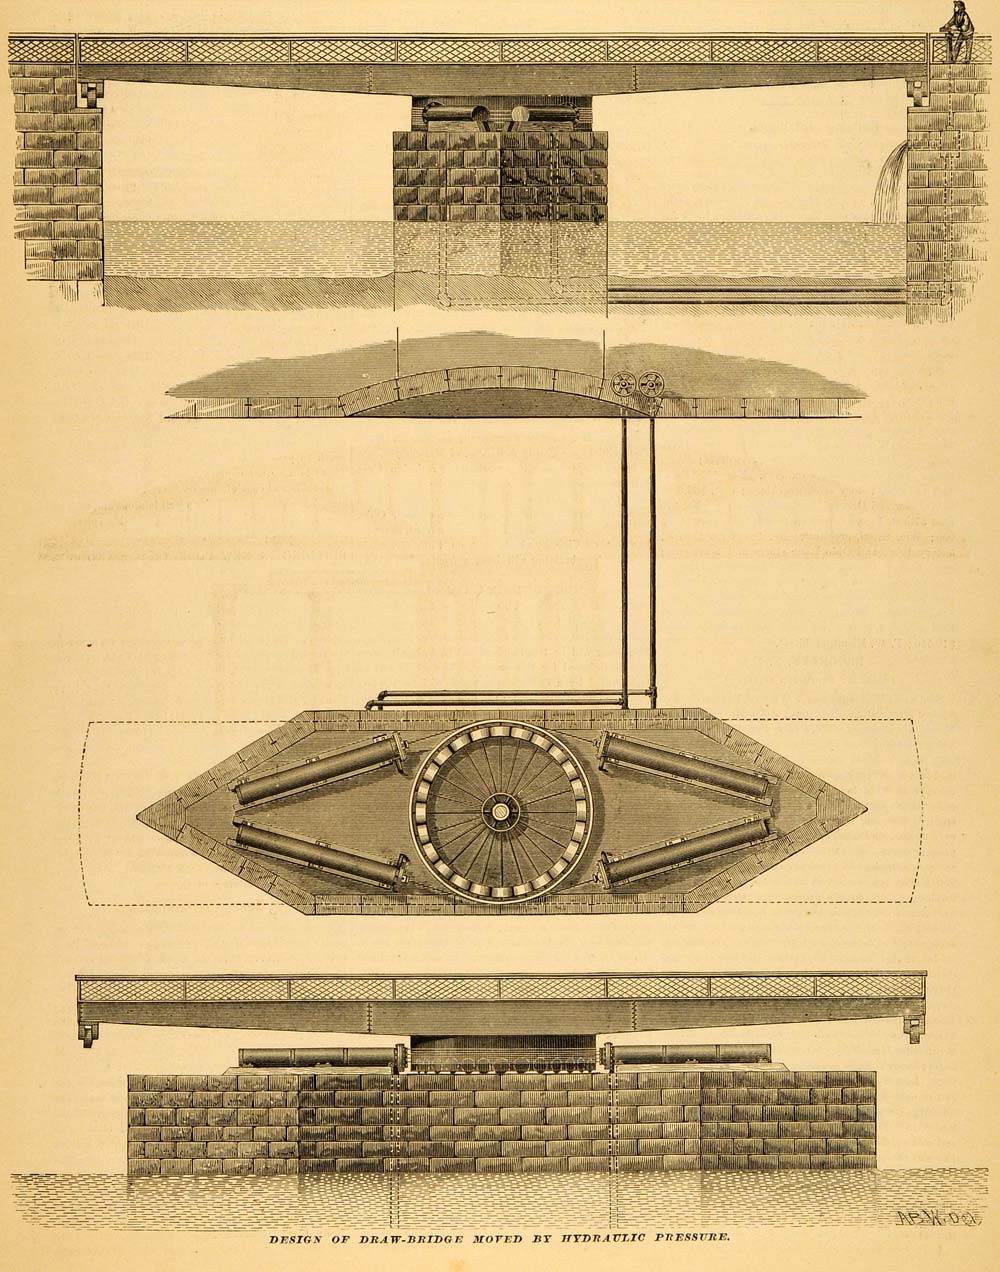 1879 Print Drawbridge Hydraulic Pressure Engineering Architecture Bridge MAB1